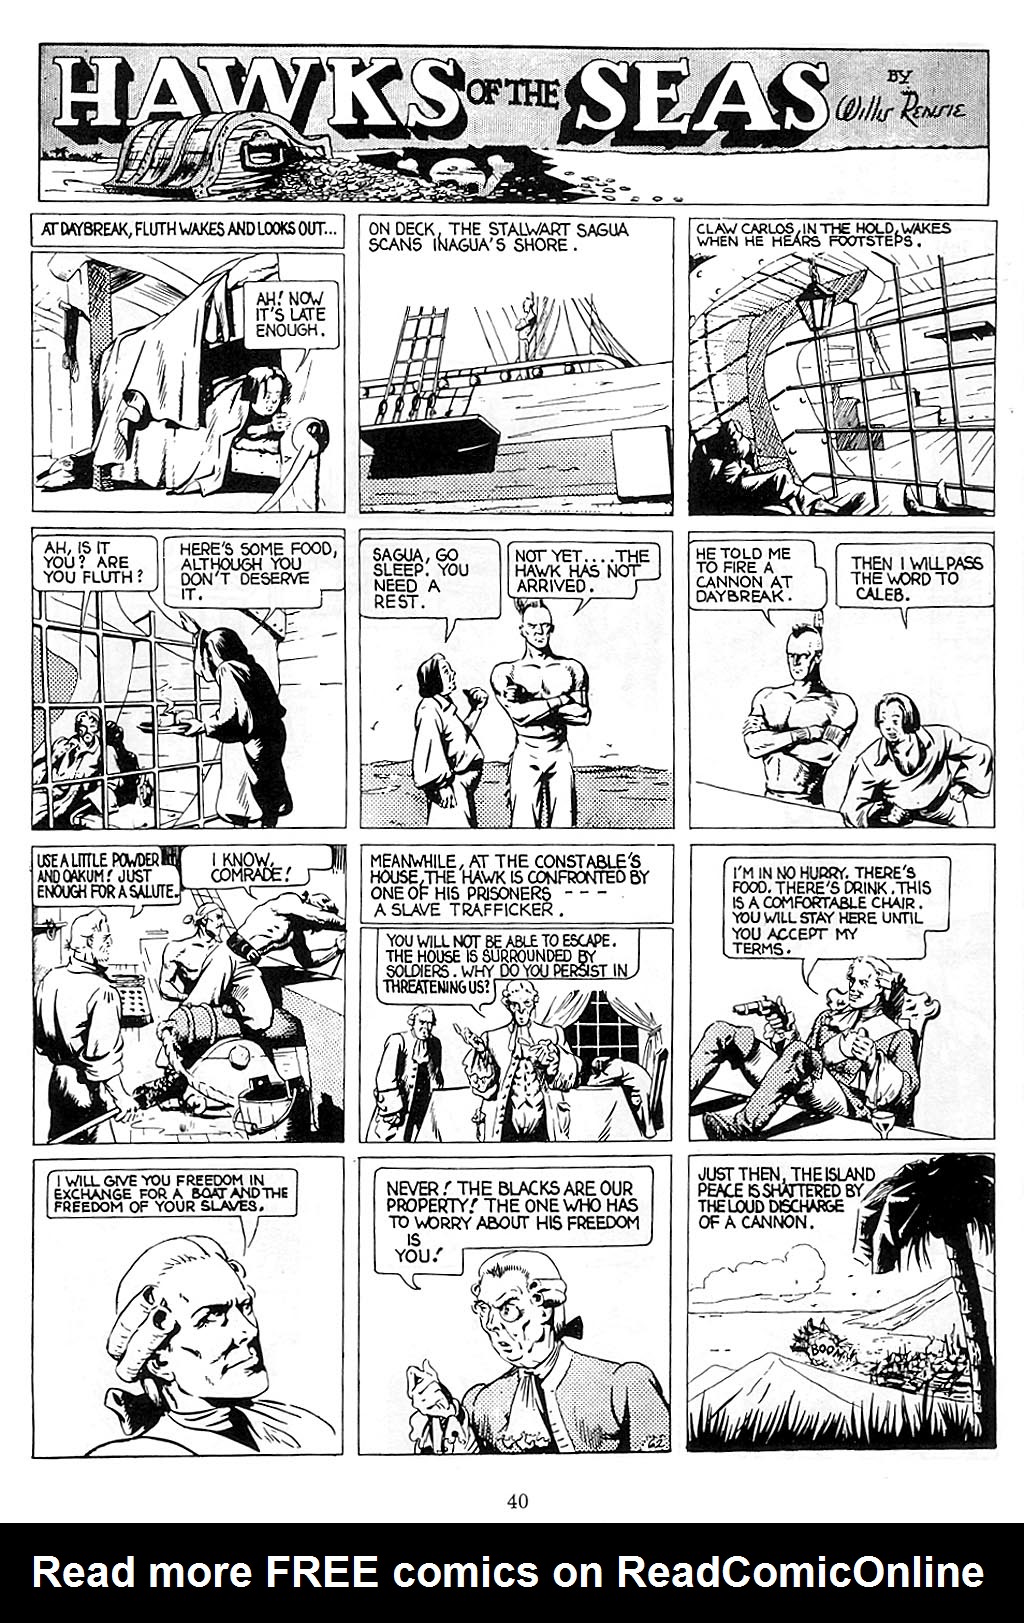 Read online Will Eisner's Hawks of the Seas comic -  Issue # TPB - 41